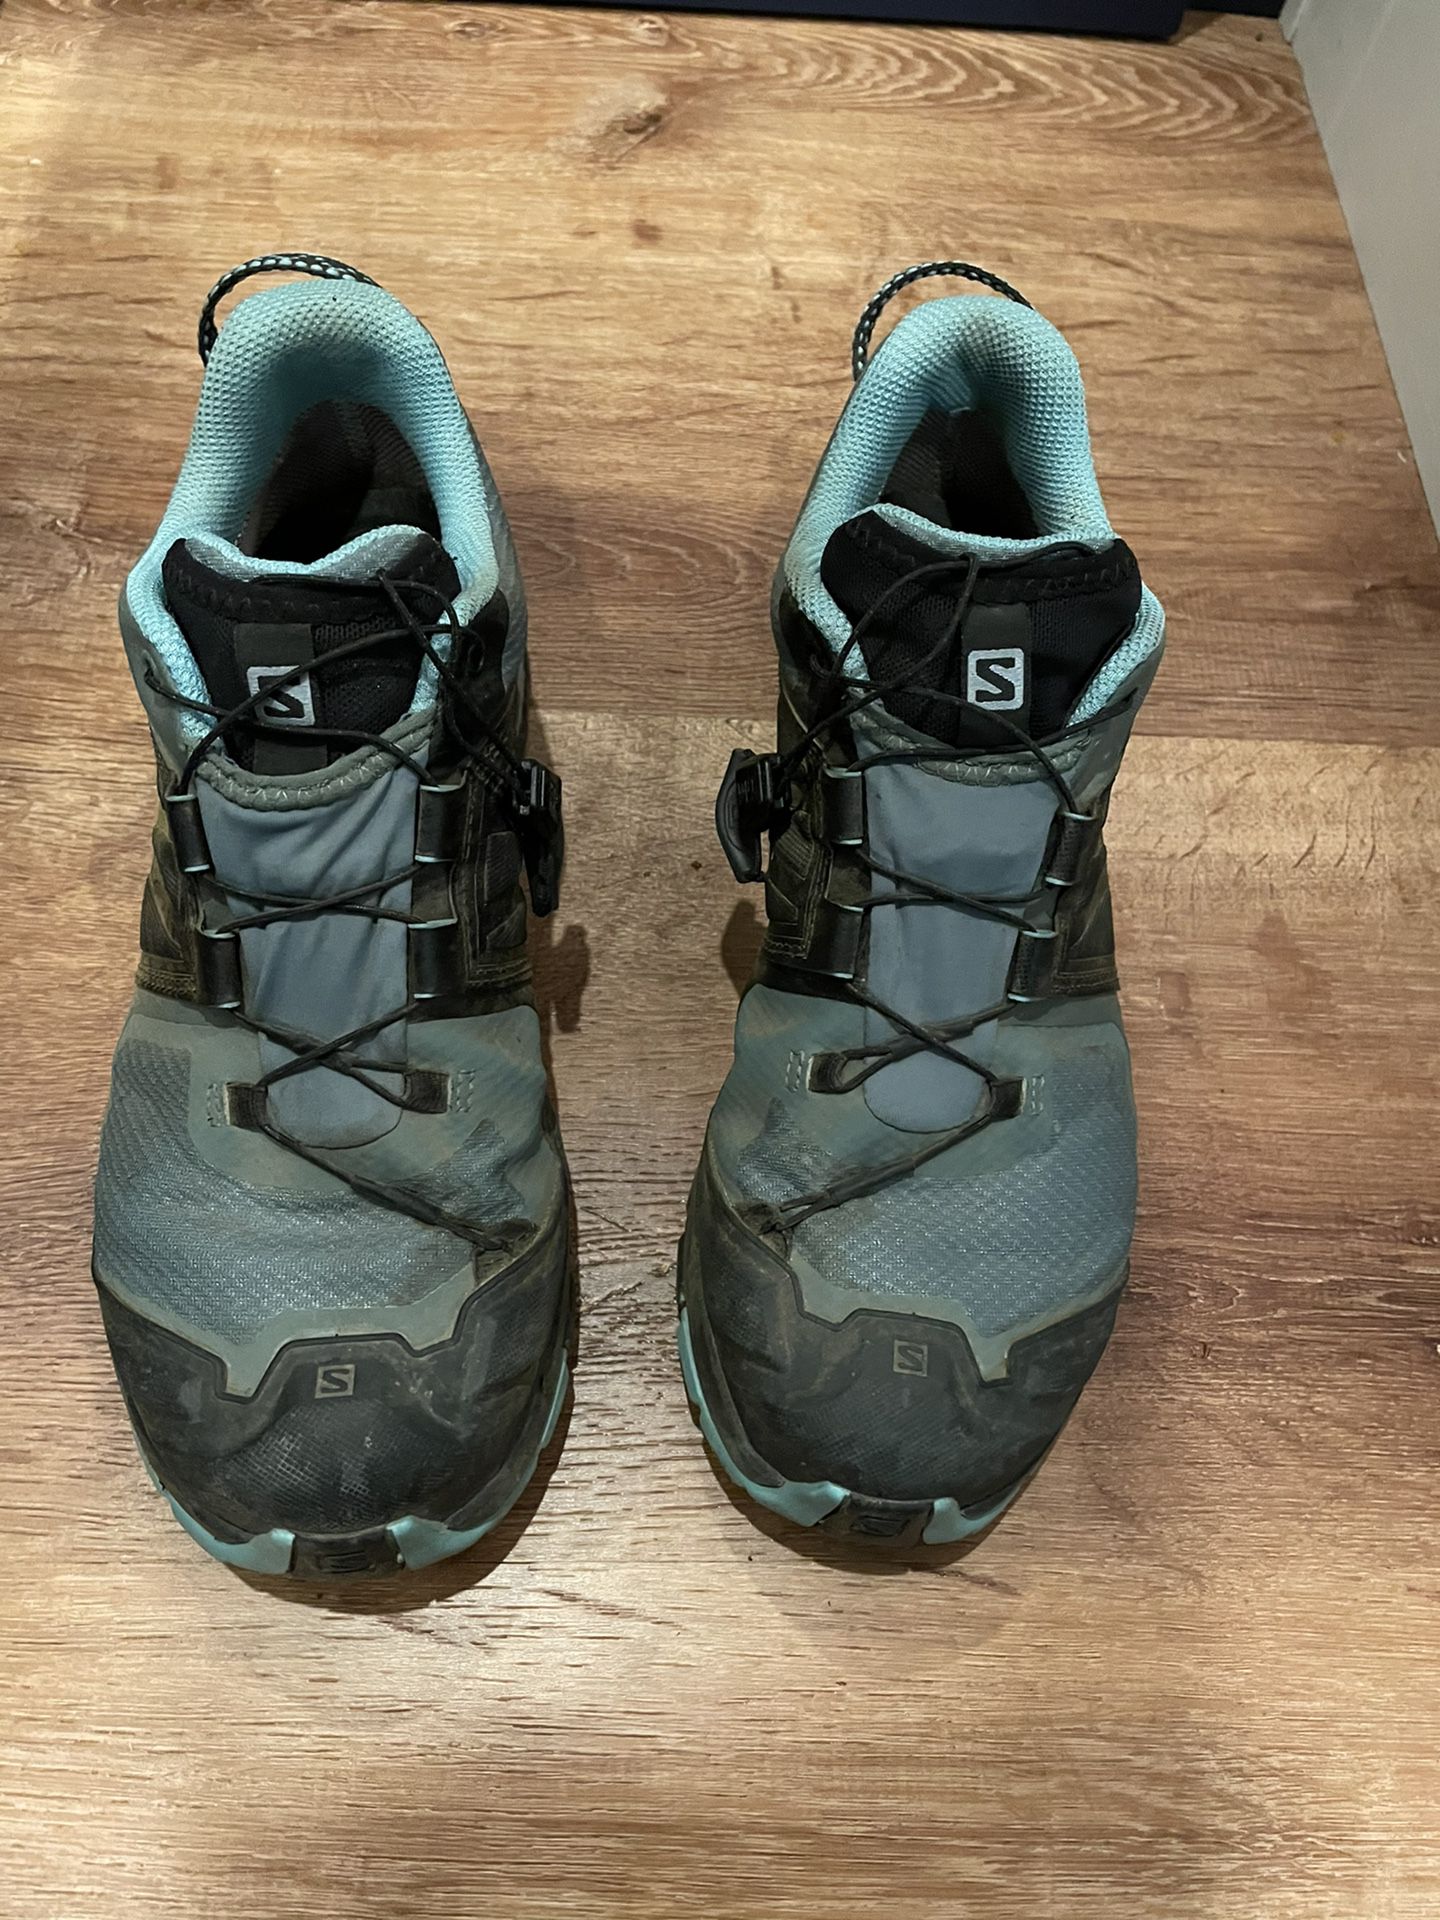 Salomon XA Wild GTX Hiking Shoe 8 for Sale in San Diego, CA - OfferUp